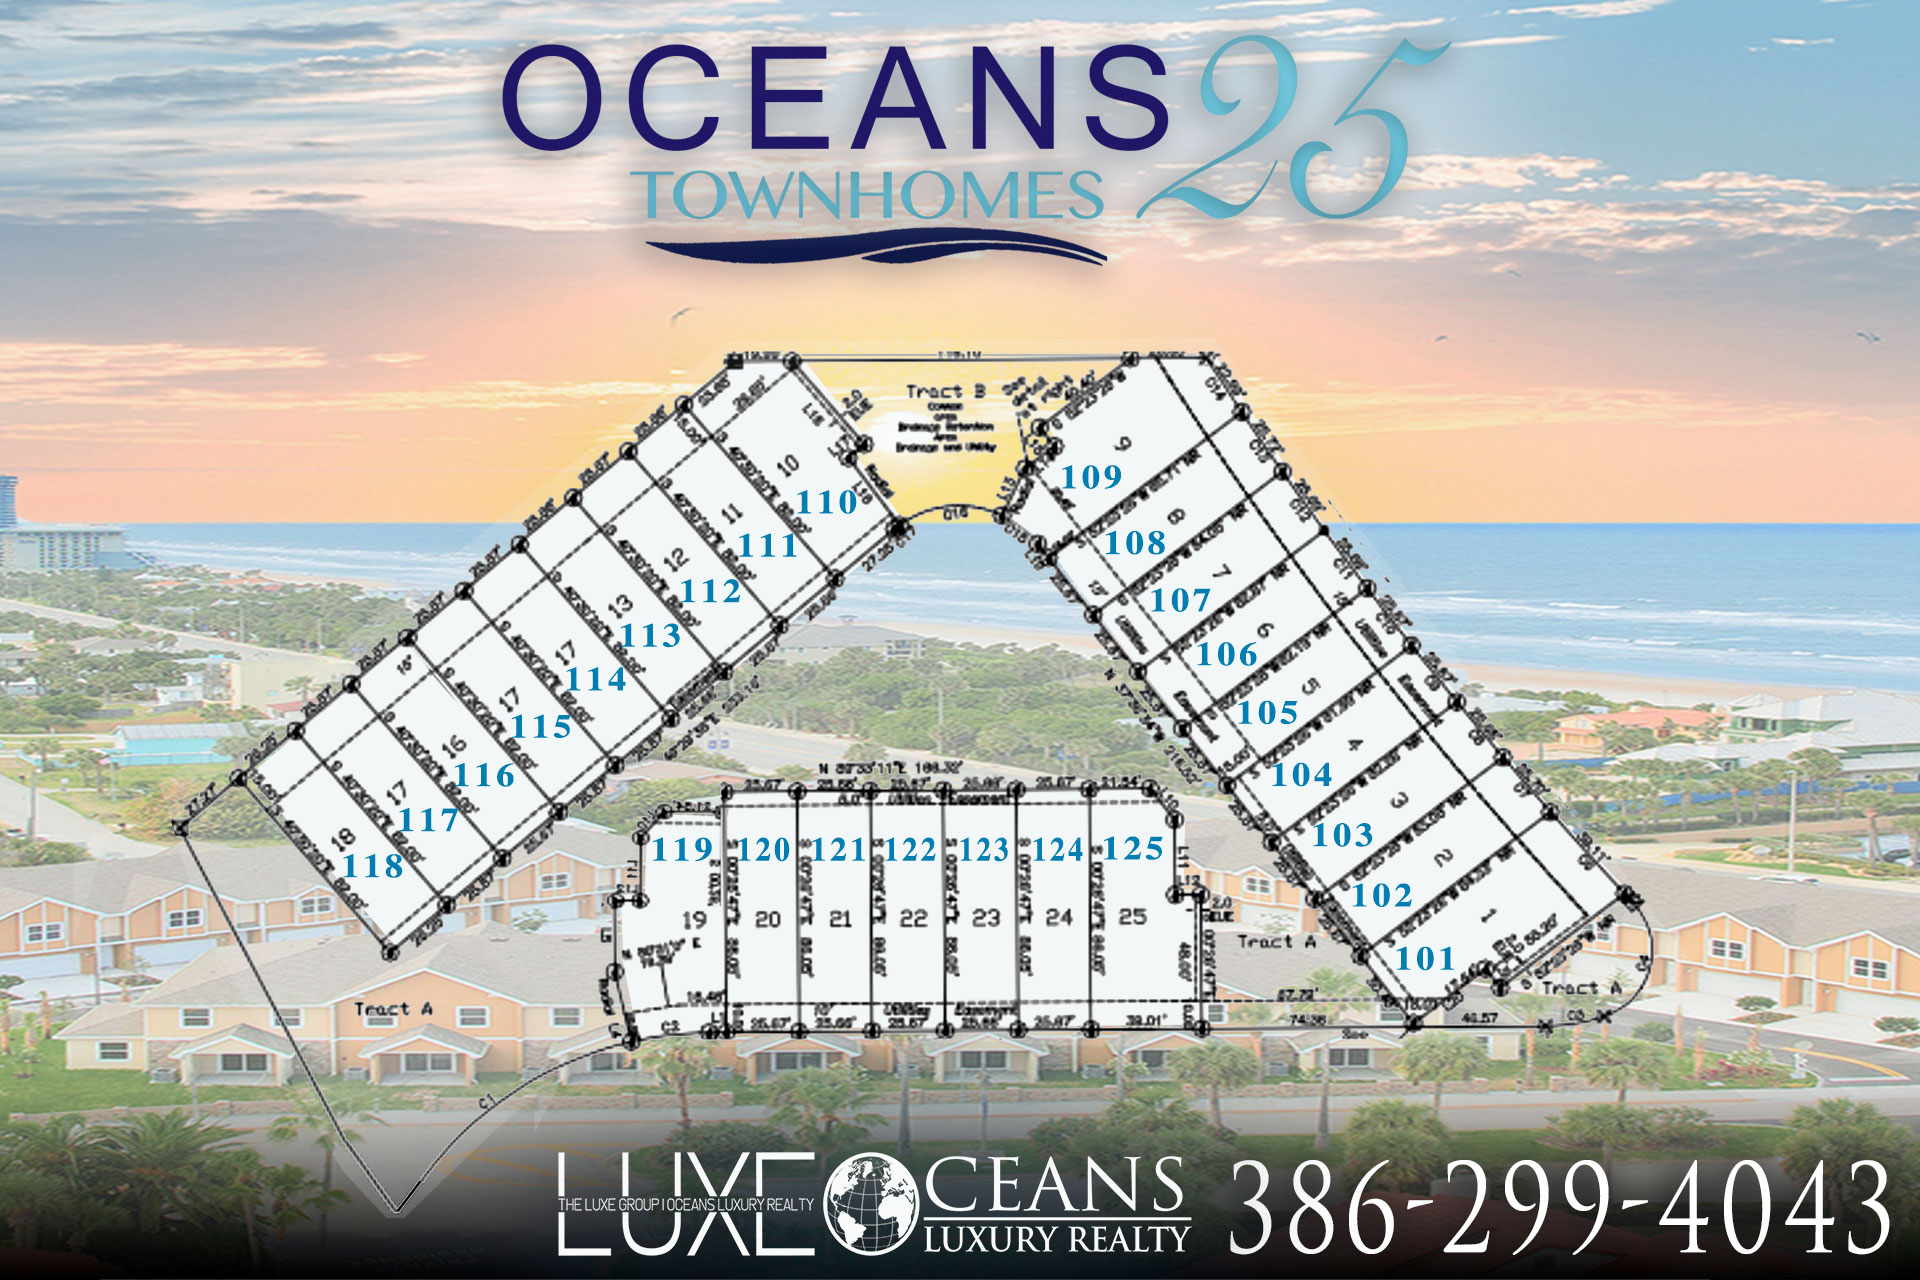 Oceans 25 Townhomes For Sale | AirBB Short Term Rental | Daytona Beach Shores Real Estate